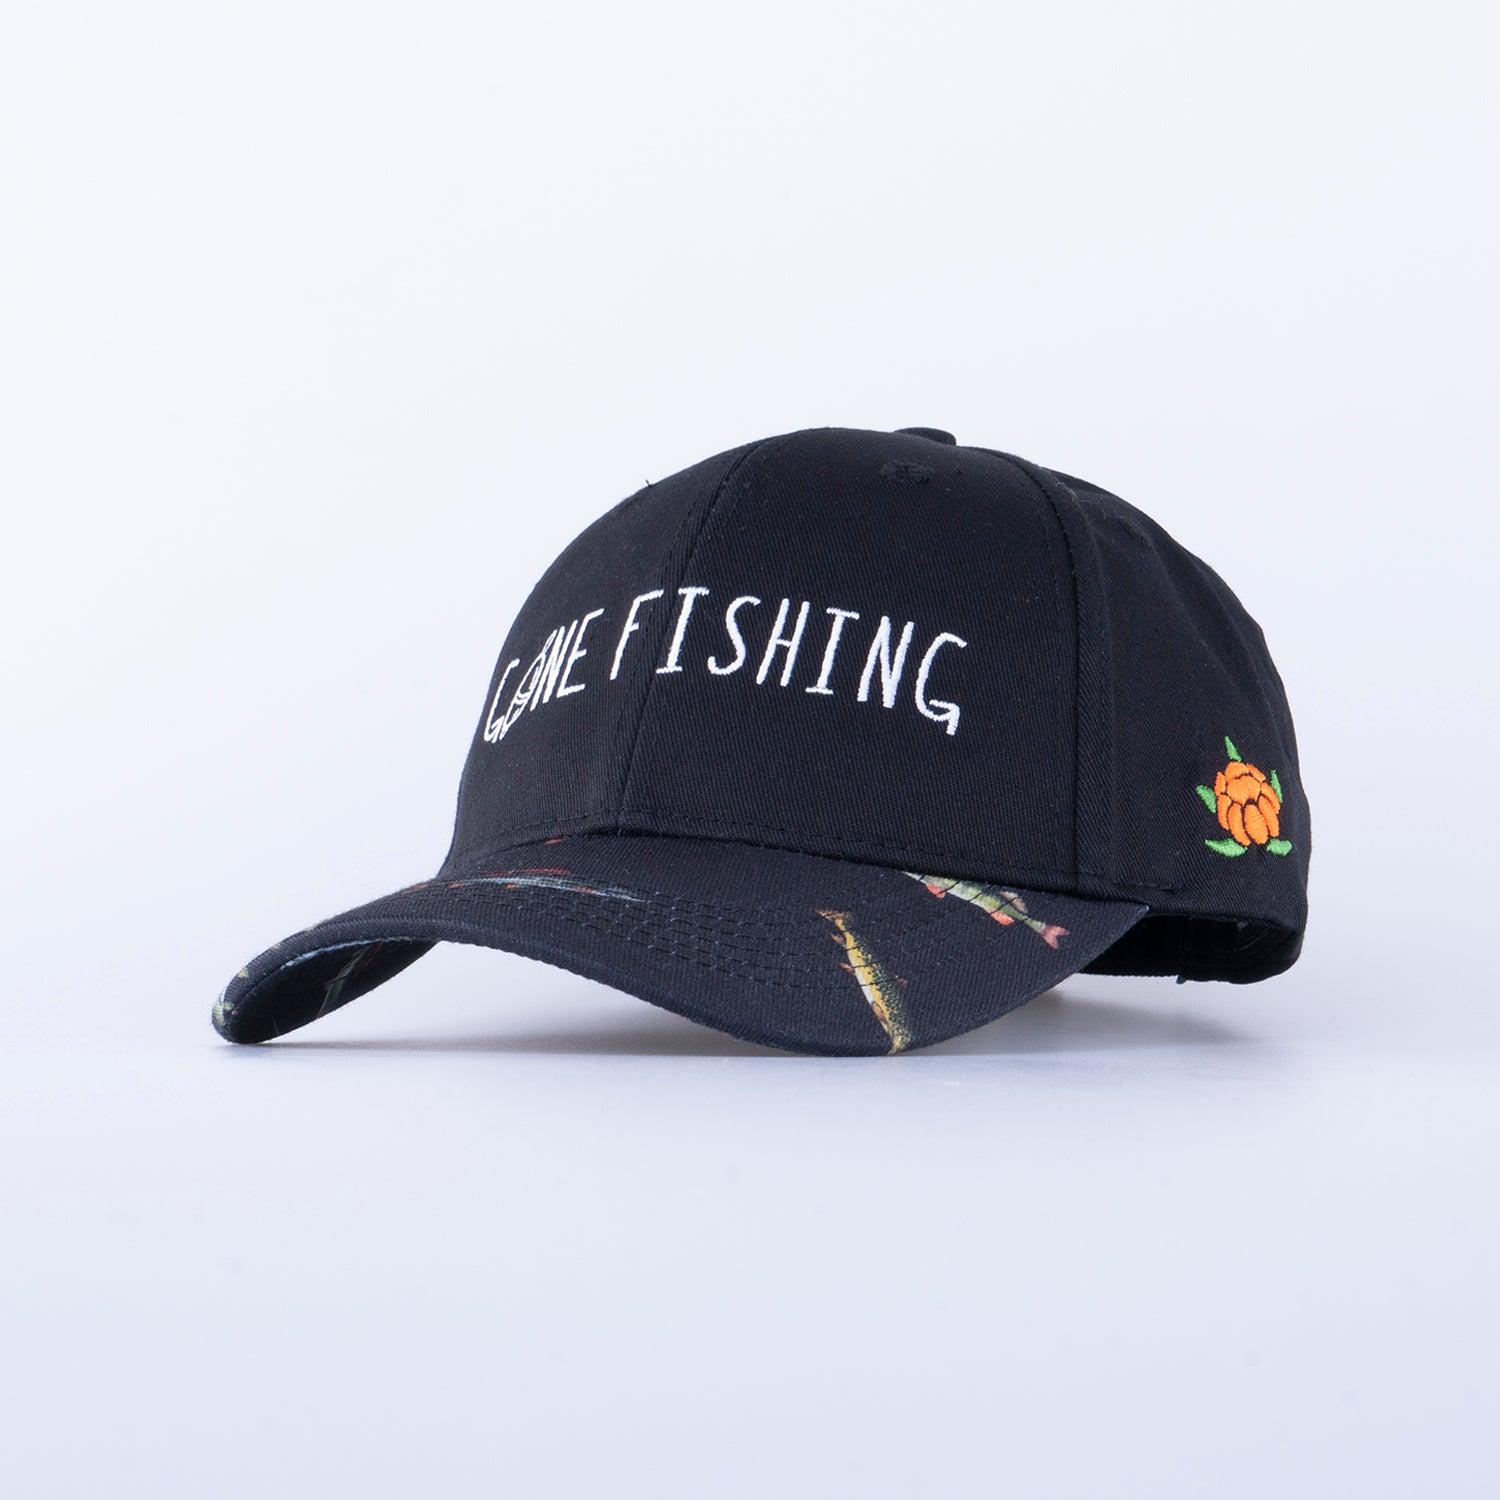 GONE FISHING CAP - HOOKED BLACK